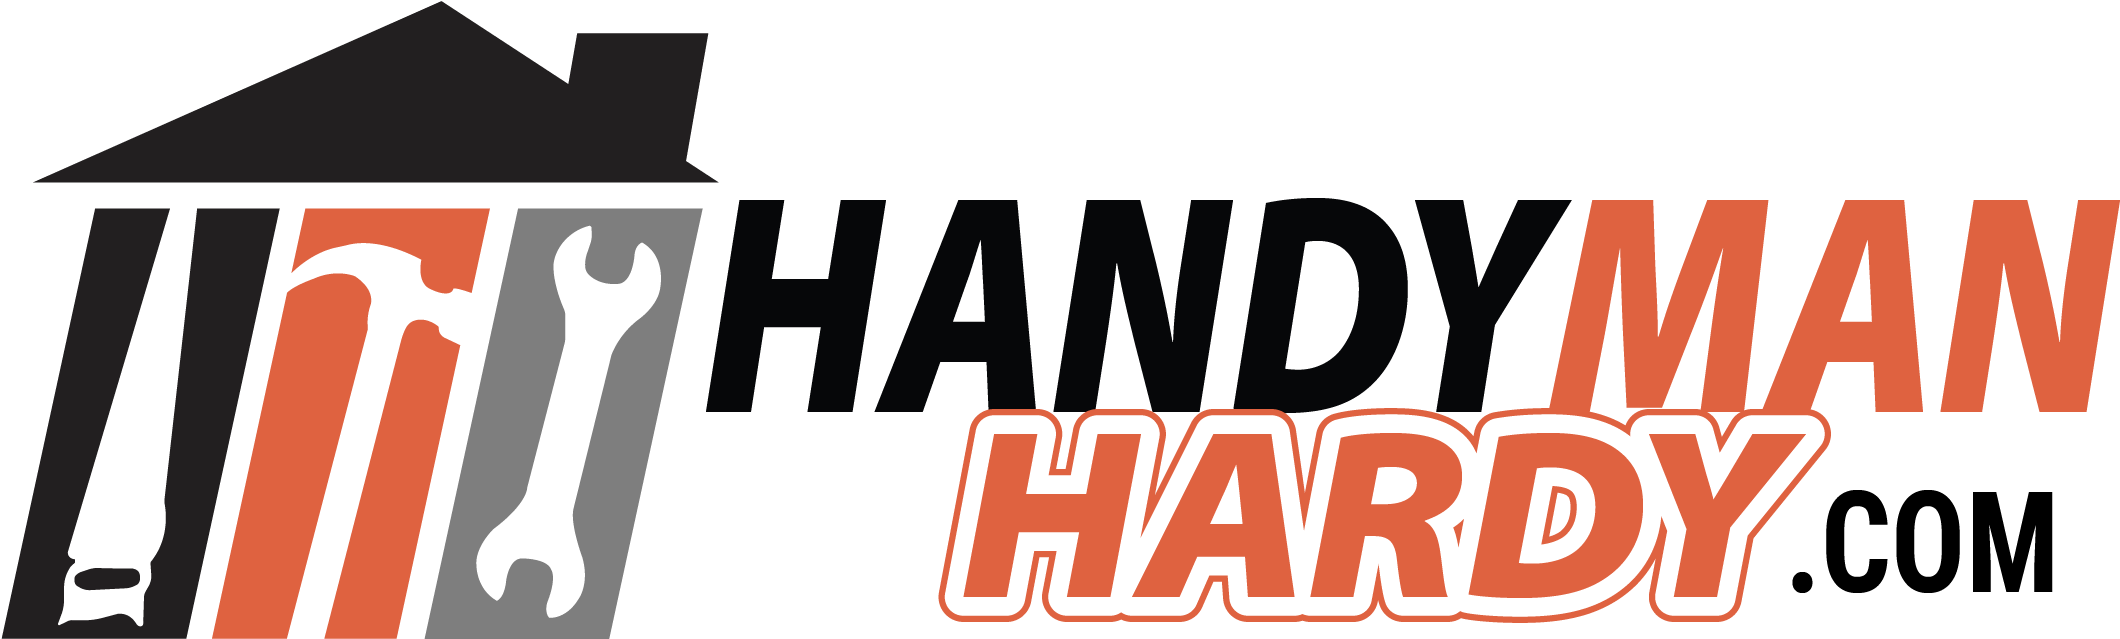 Handyman-hardy - Handyman Hardy, Hd Png Download